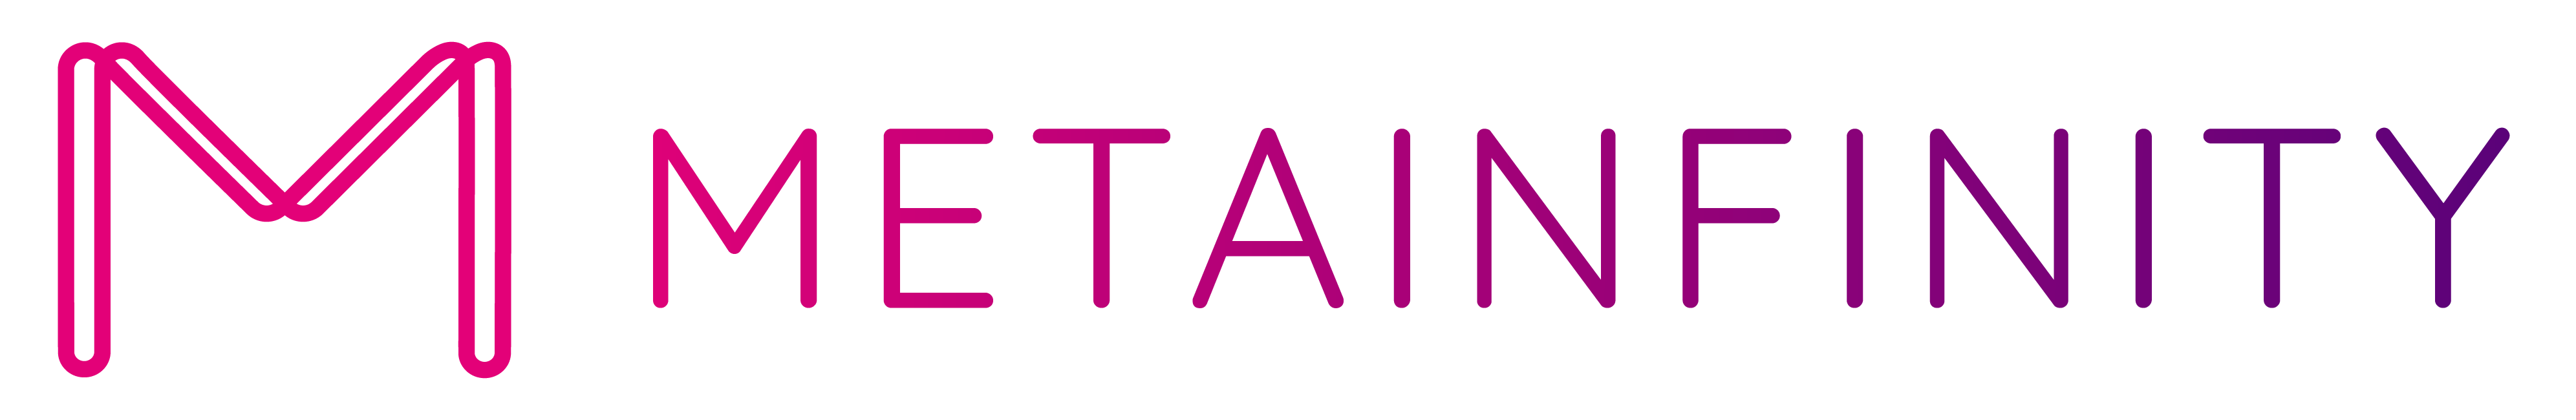 MetaInfinity Digital AB logo